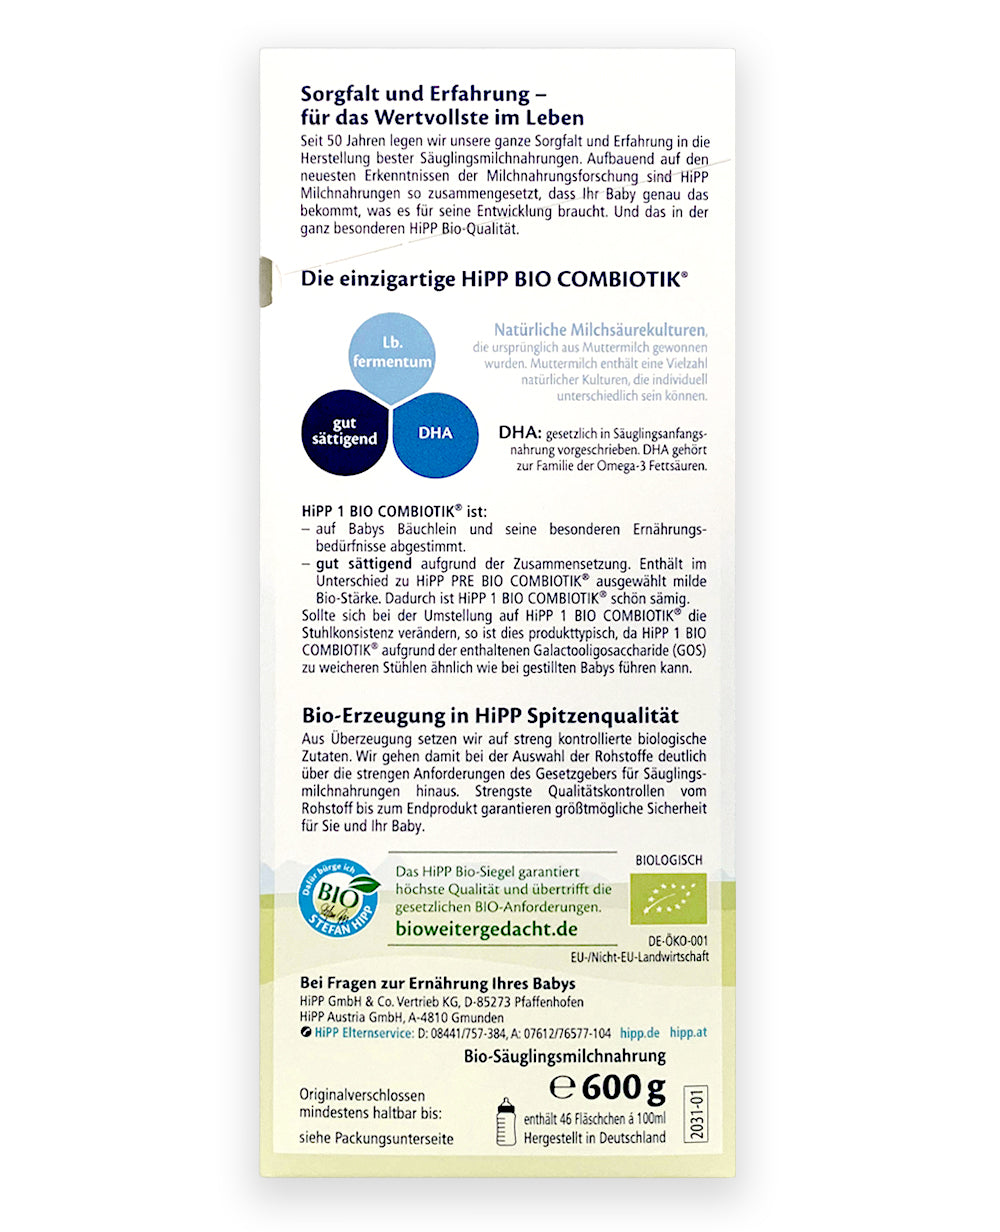 HiPP Dutch Stage 3 Combiotic Formula // Save $90.00 on 1st Order